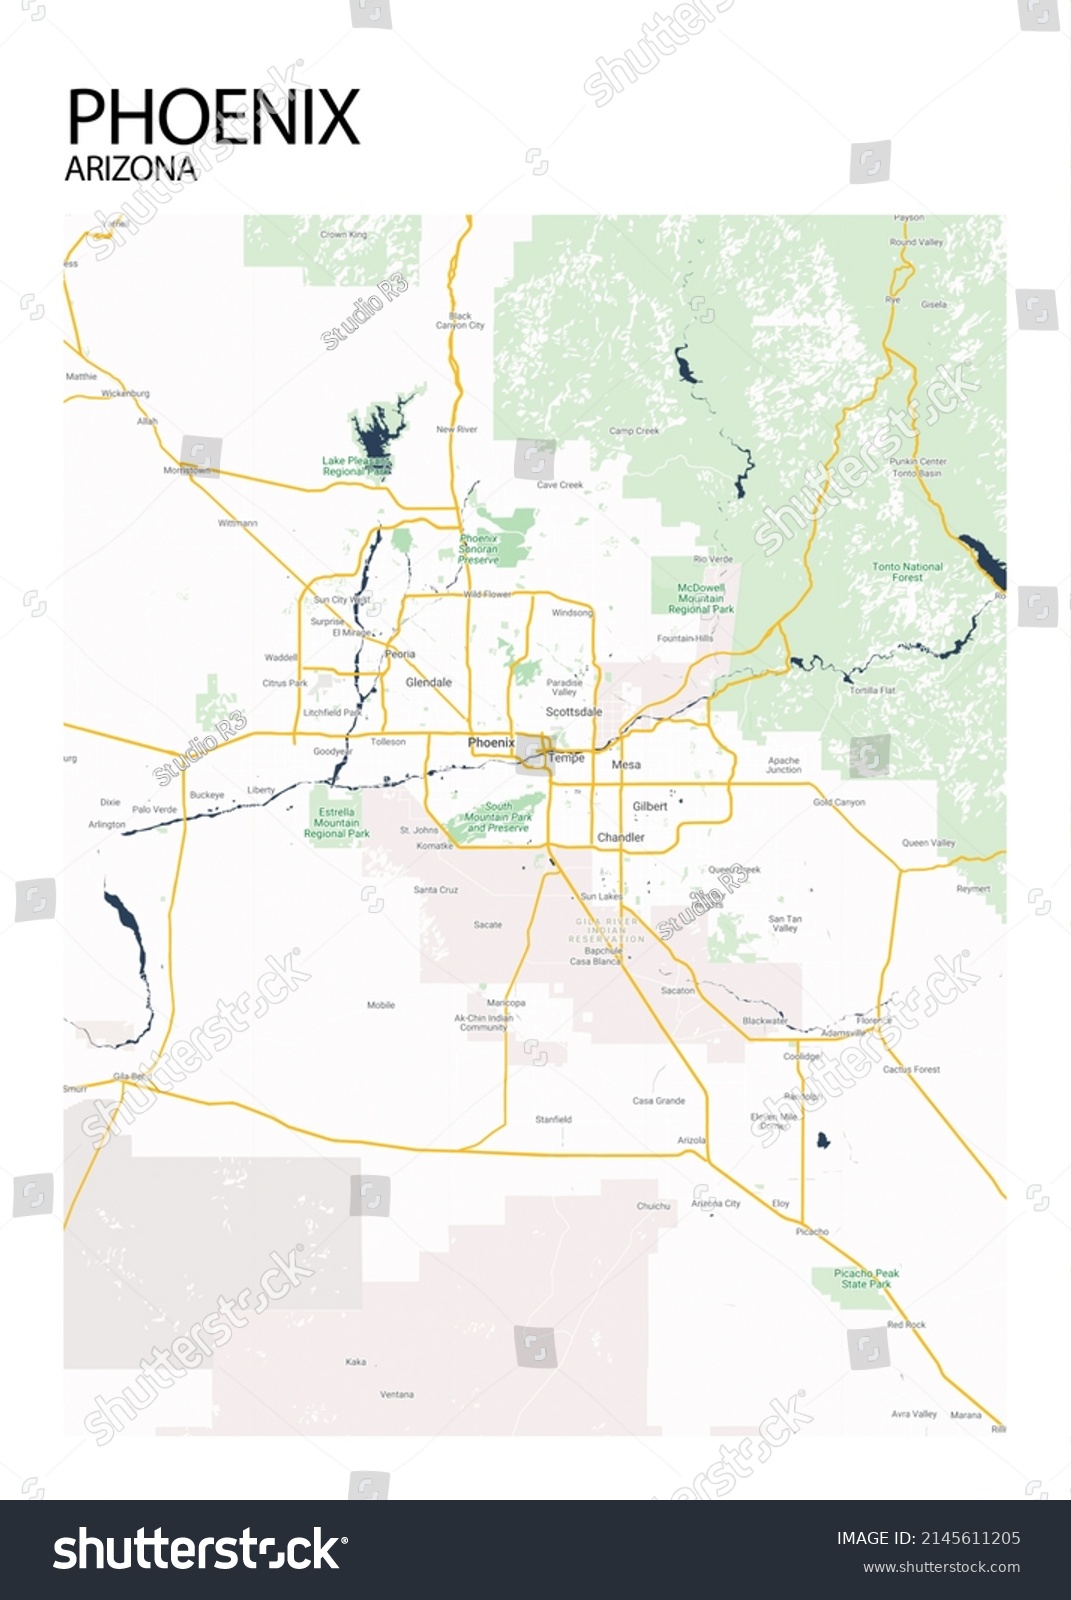 Stock Photo Poster Phoenix Arizona Map Road Map Illustration Of Phoenix Arizona Streets Transportation 2145611205 